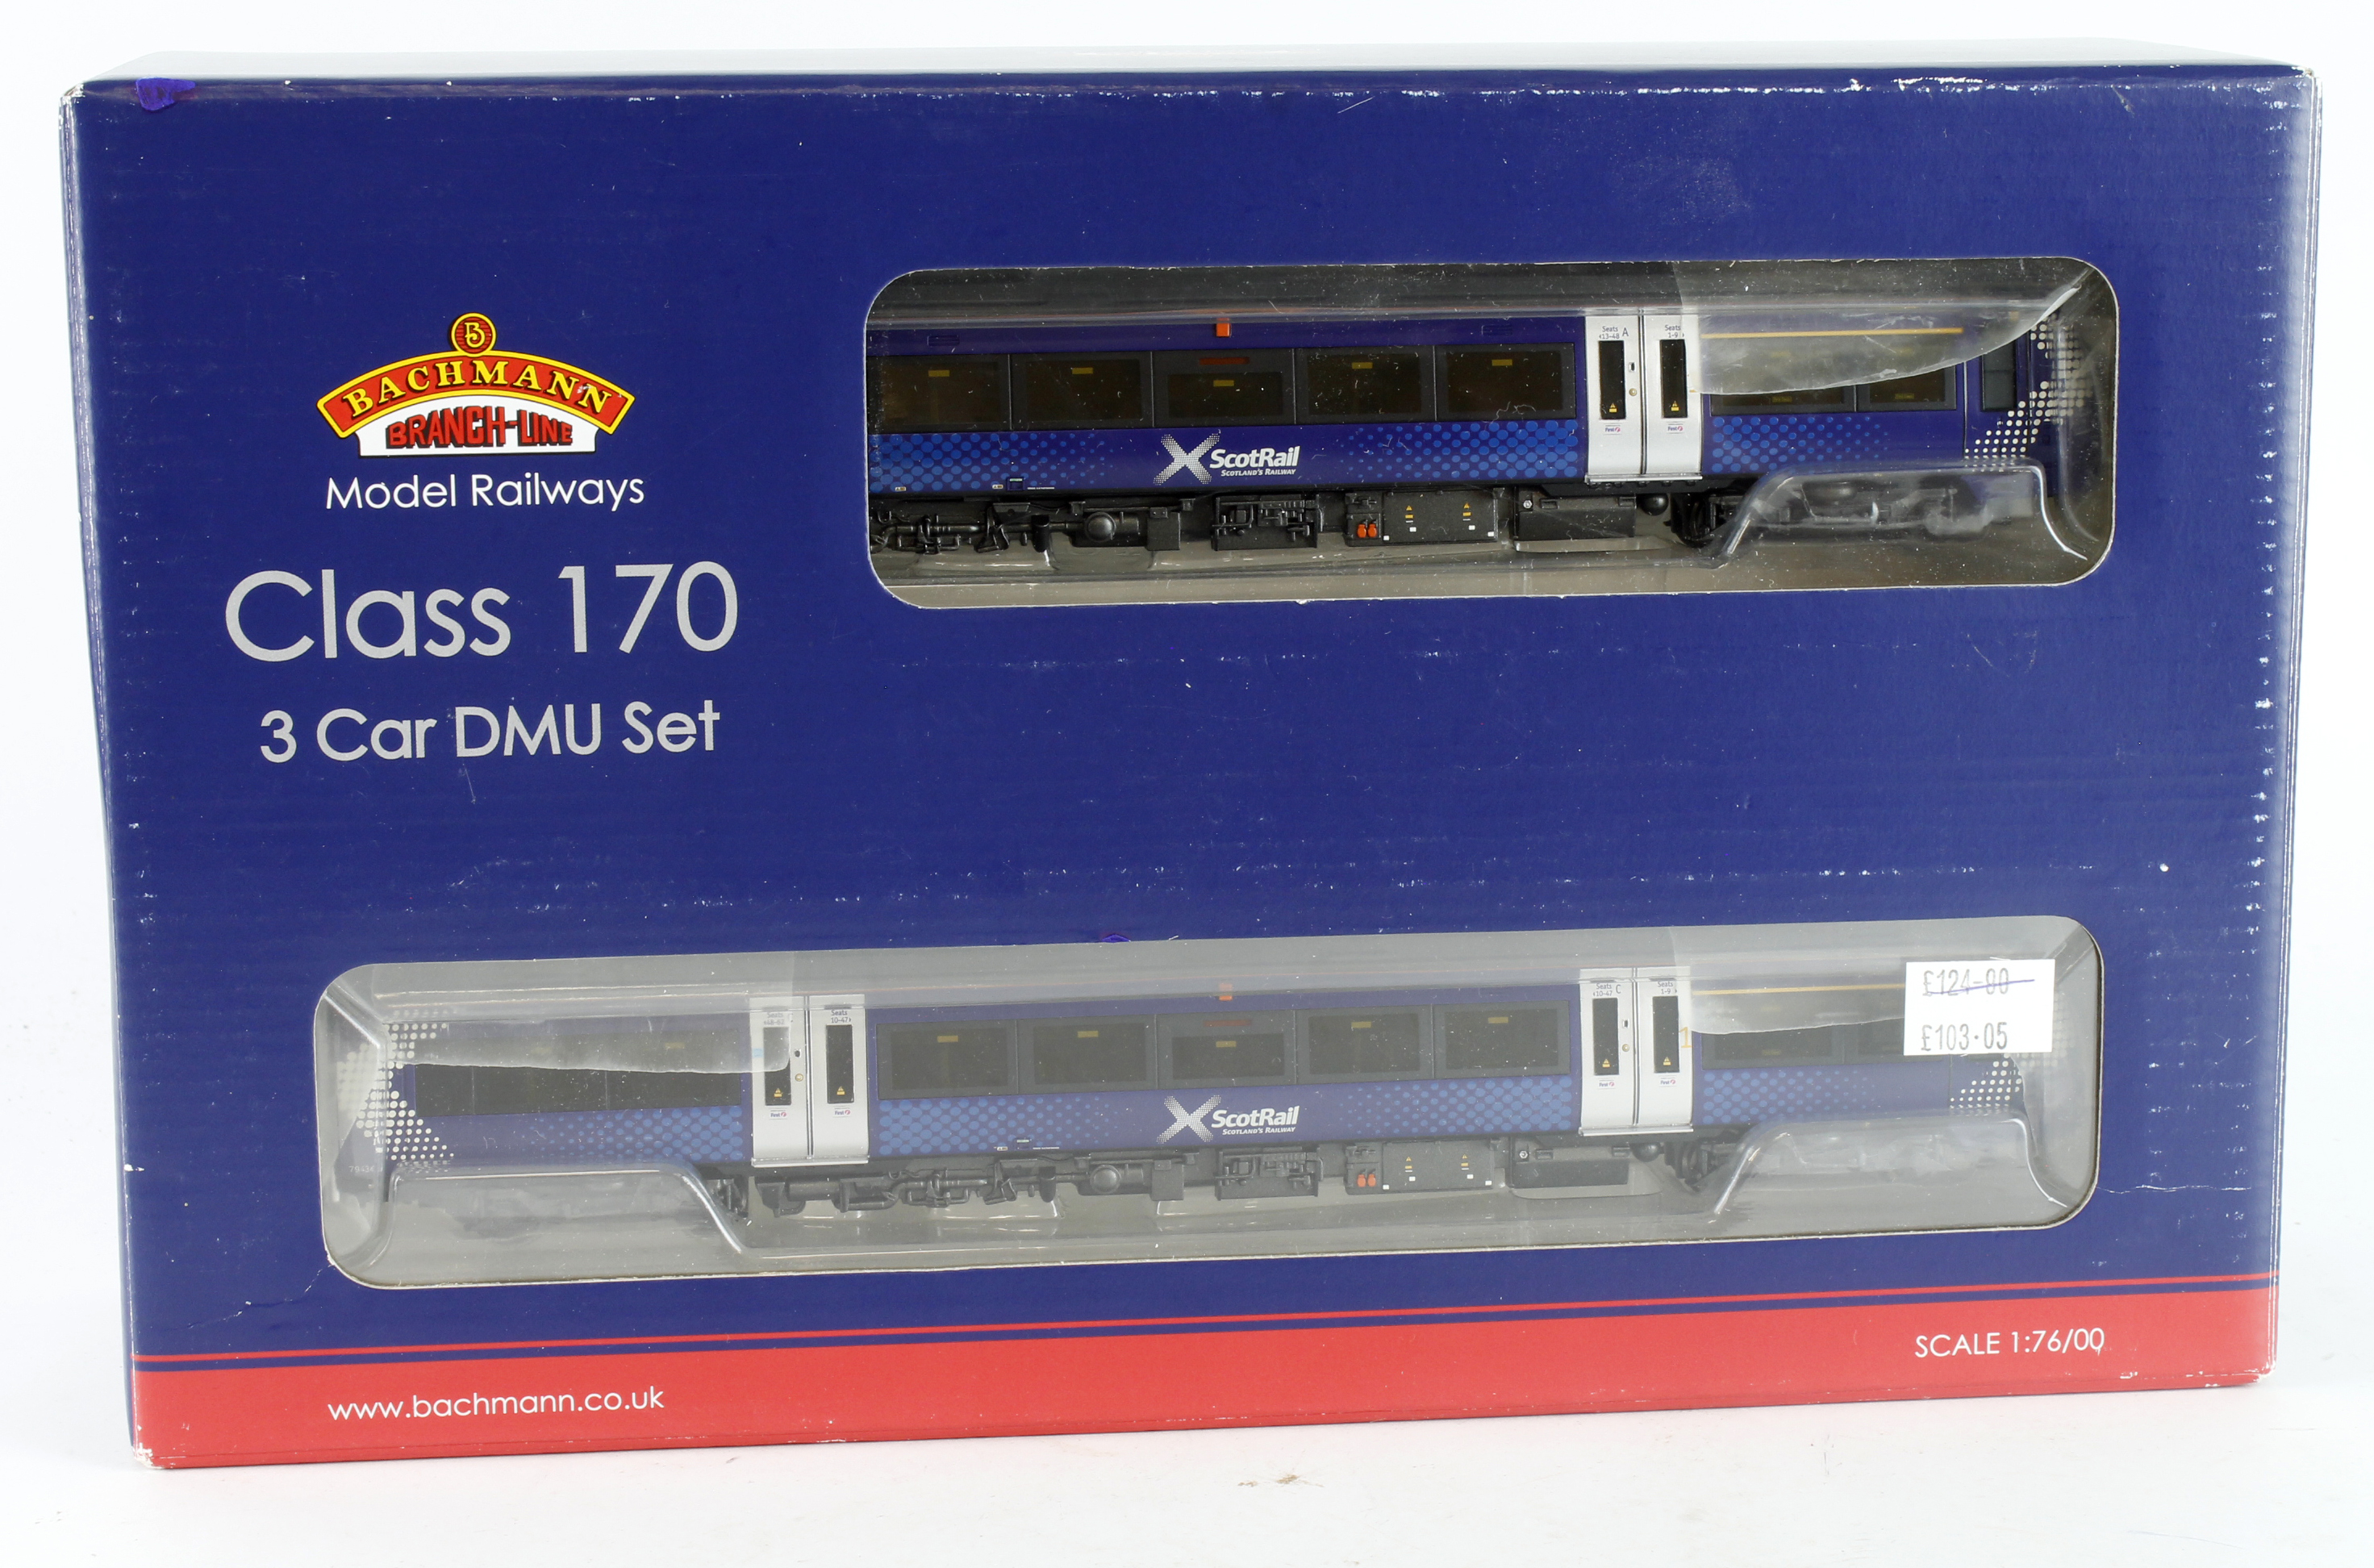 Bachmann boxed OO gauge locomotive 'Class 170/4 3 Car DMU Transport Scotland Saltire Livery (32-